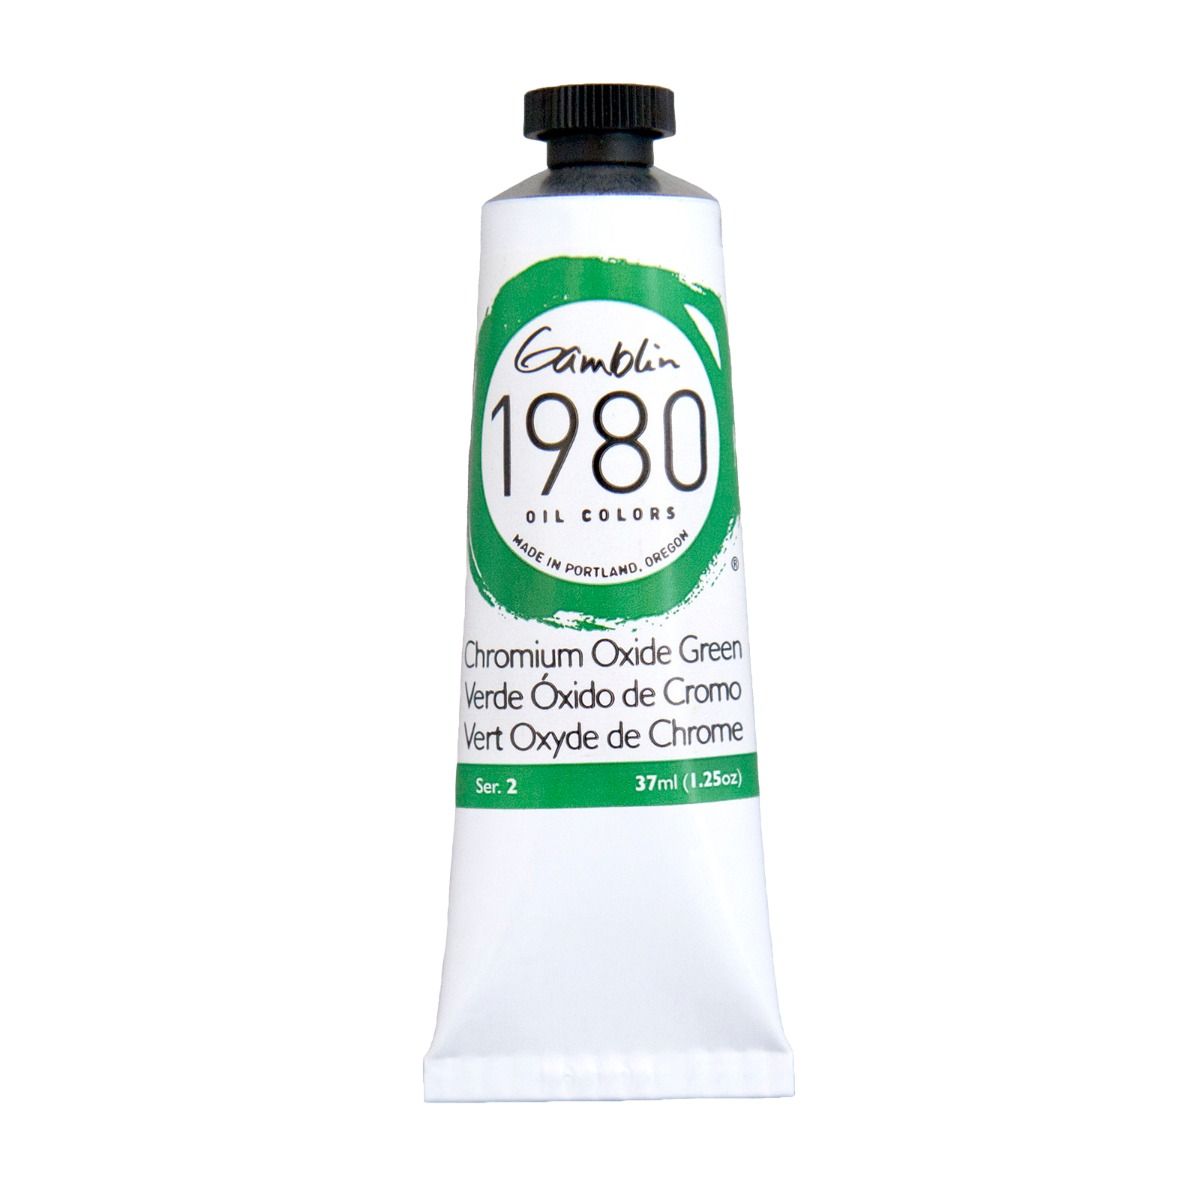 Gamblin 1980 Oils - Chromium Oxide Green, 37 ml (1.25oz)